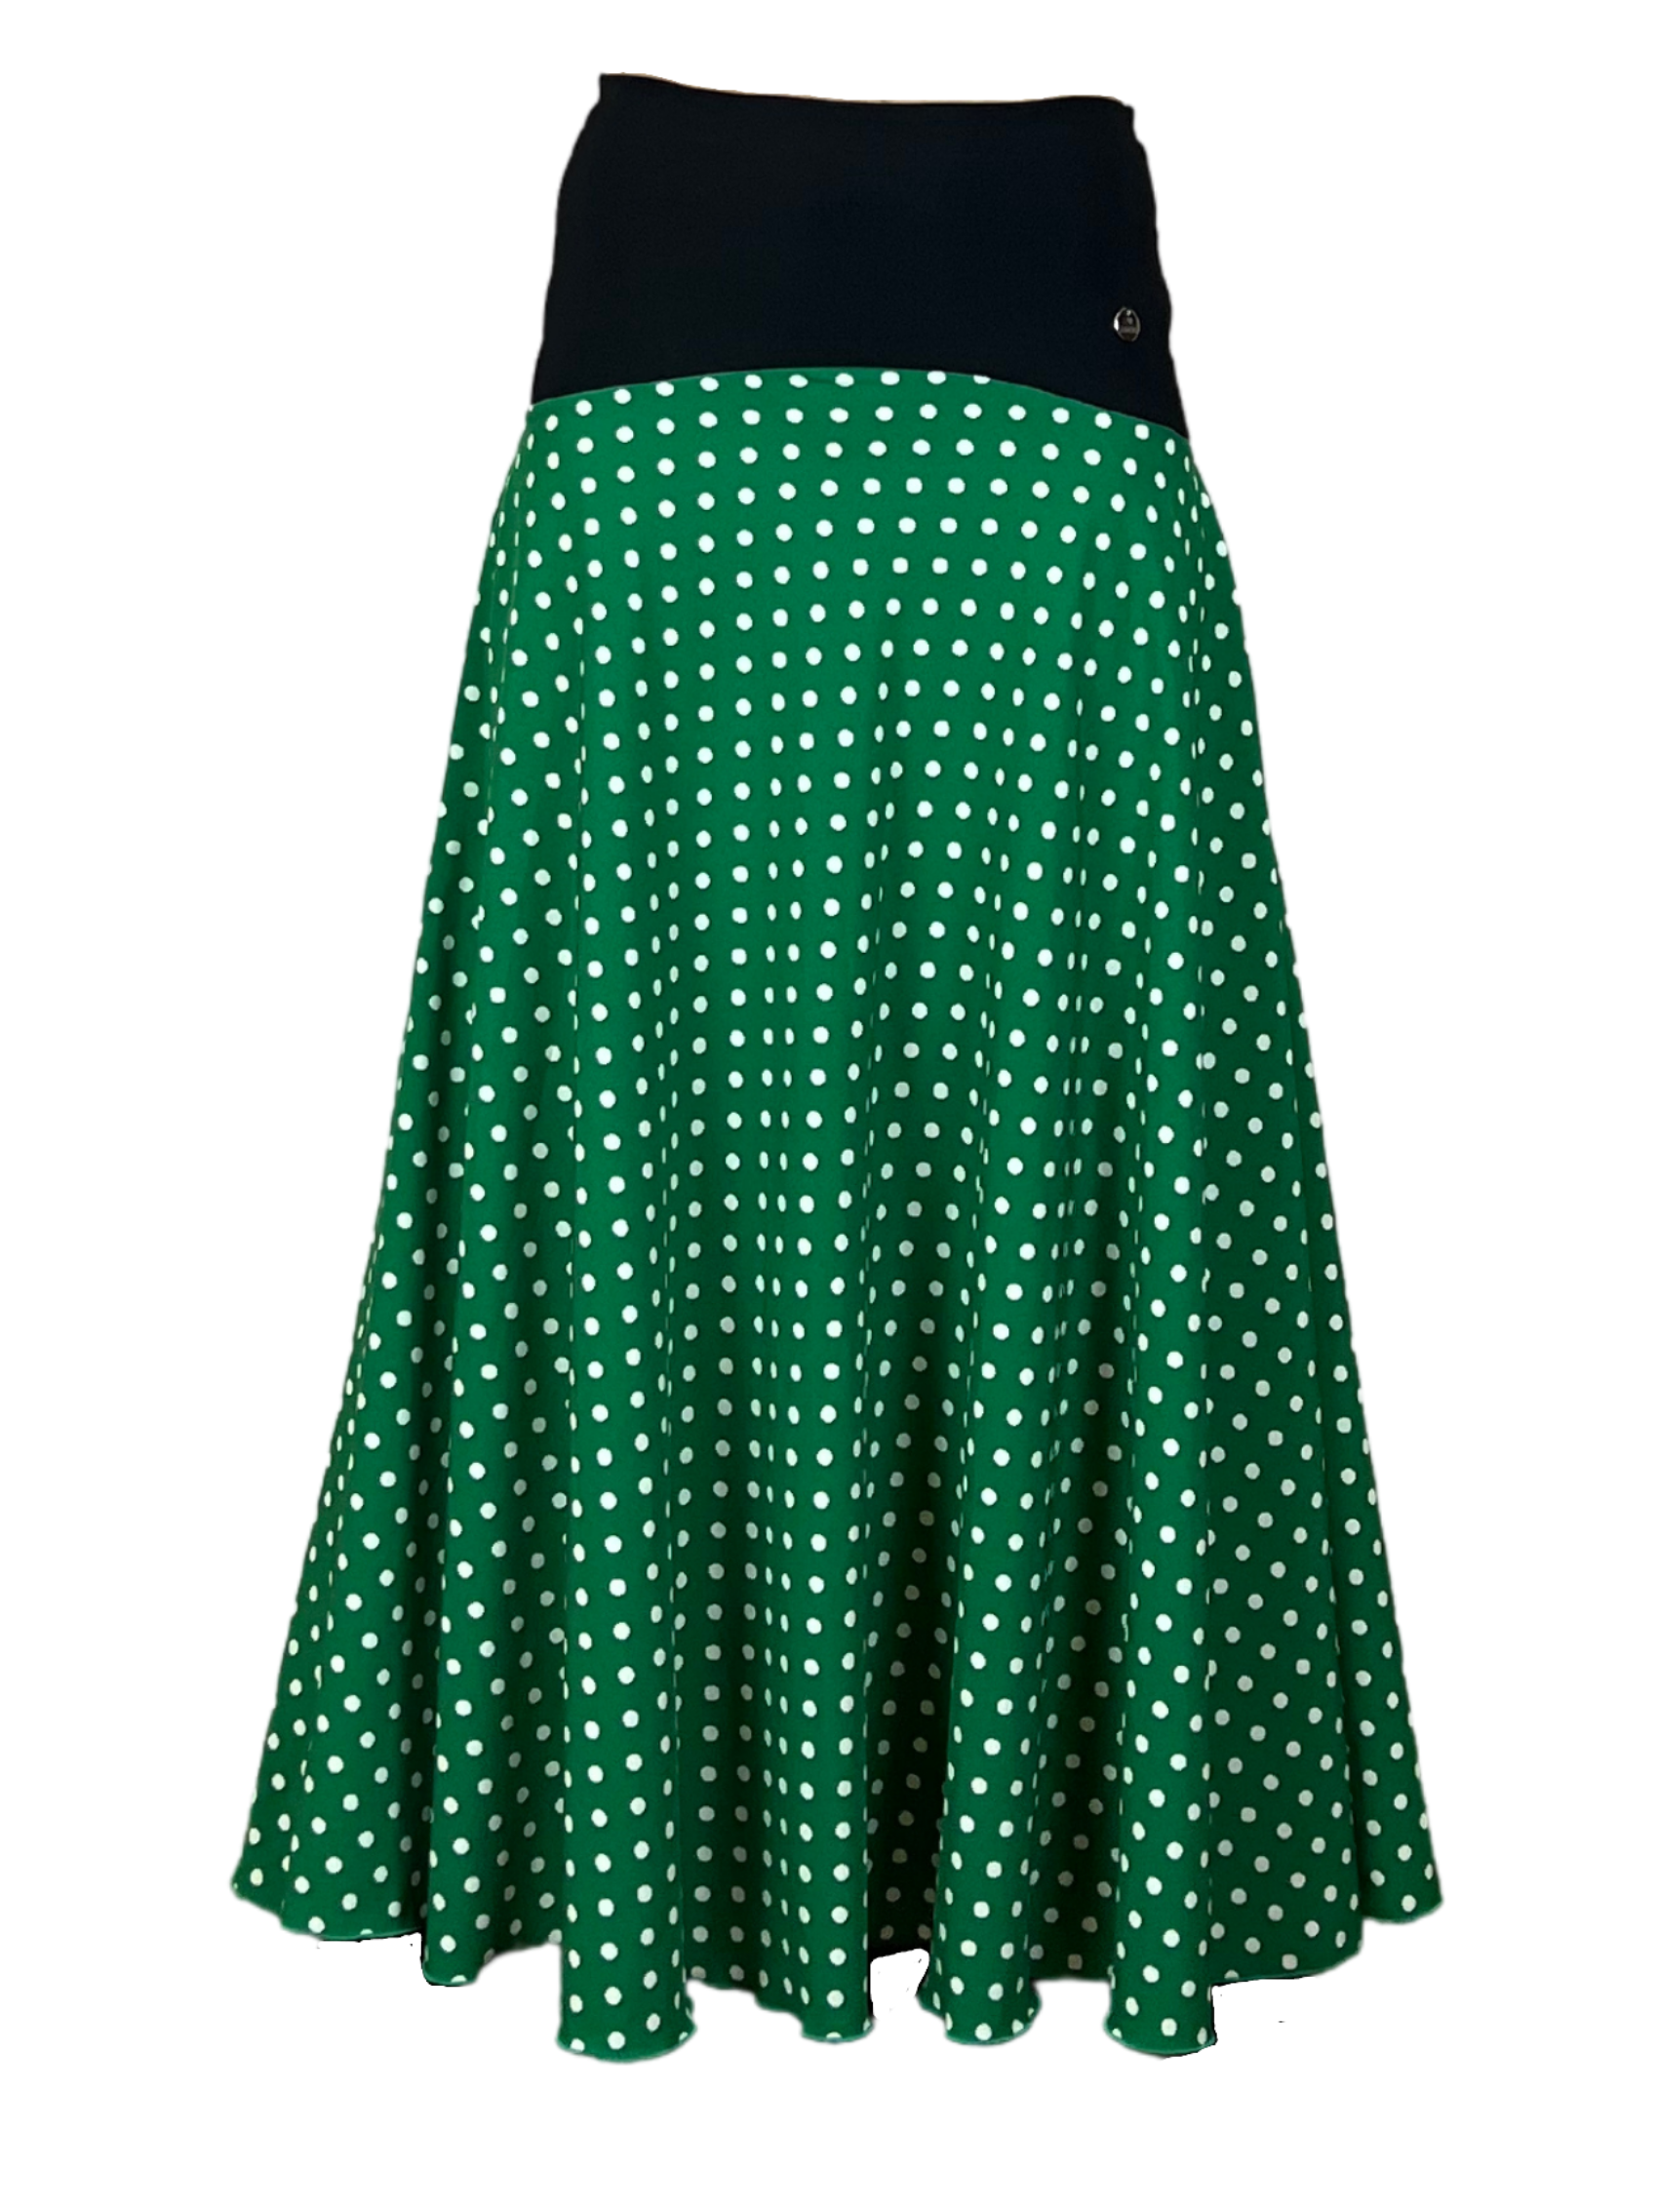 Flamenco Skirt - Practice Skirt - Green with Polka Dots - Size S - TANGOS